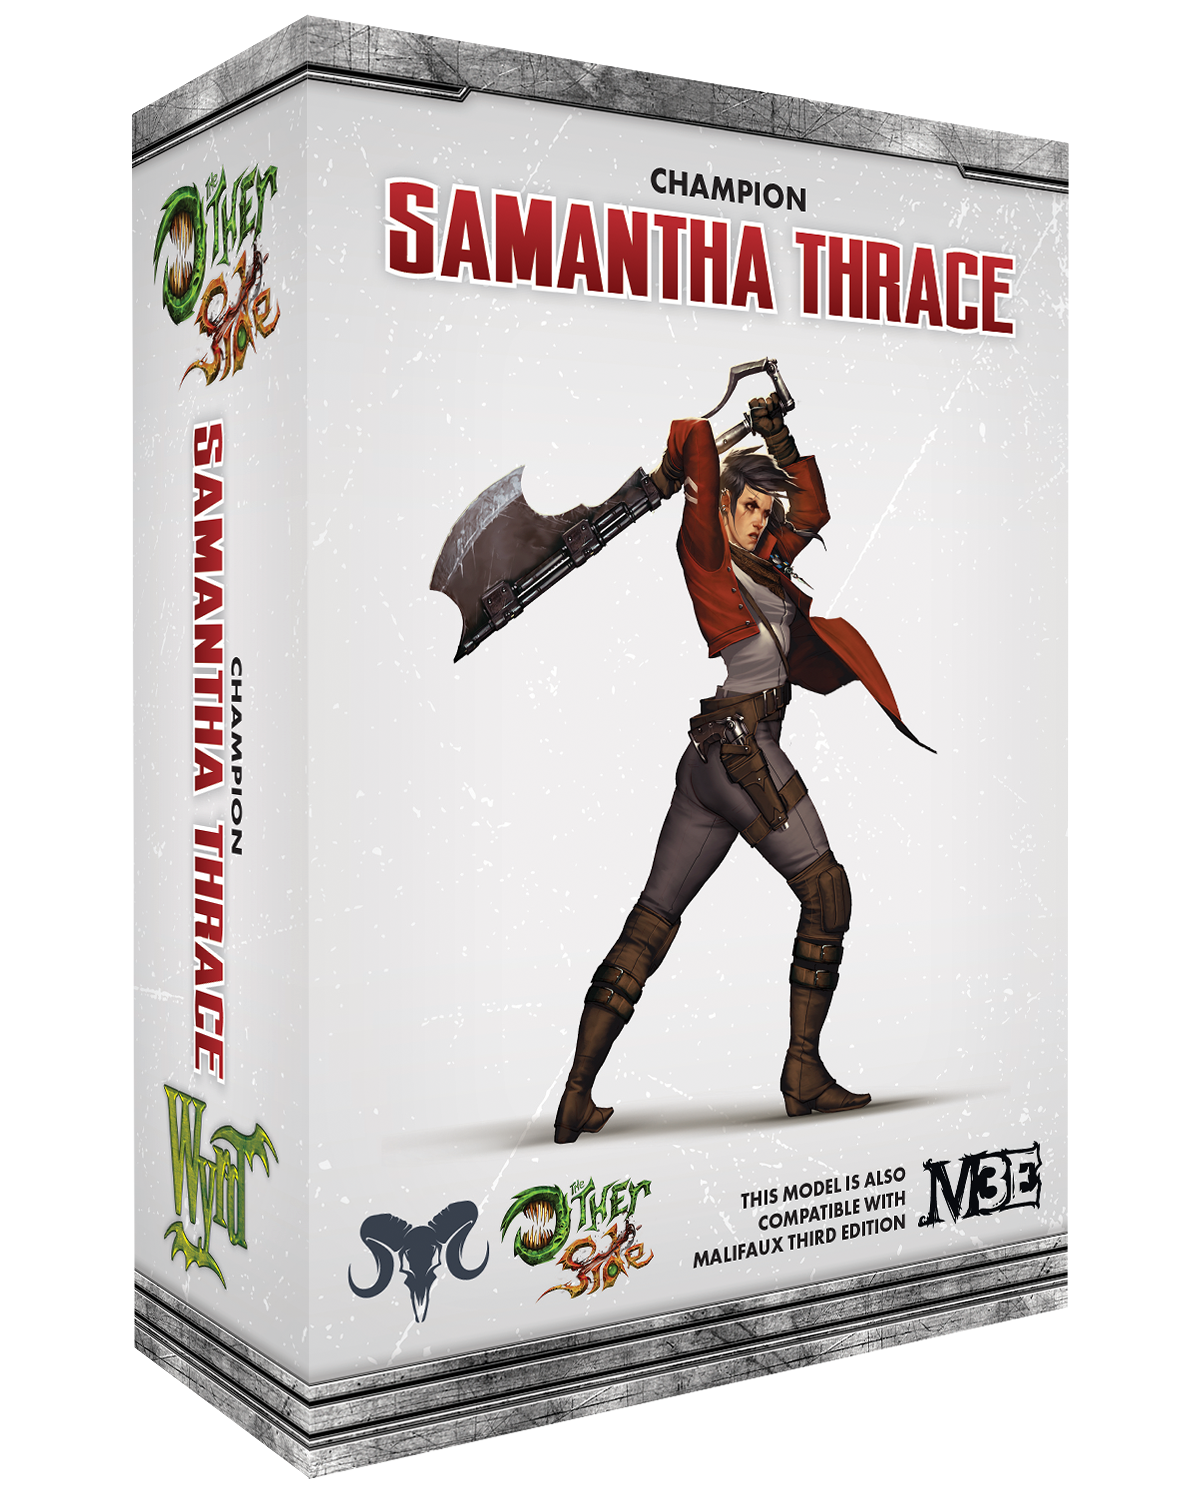 Samantha Thrace - Wyrd Miniatures - Online Store